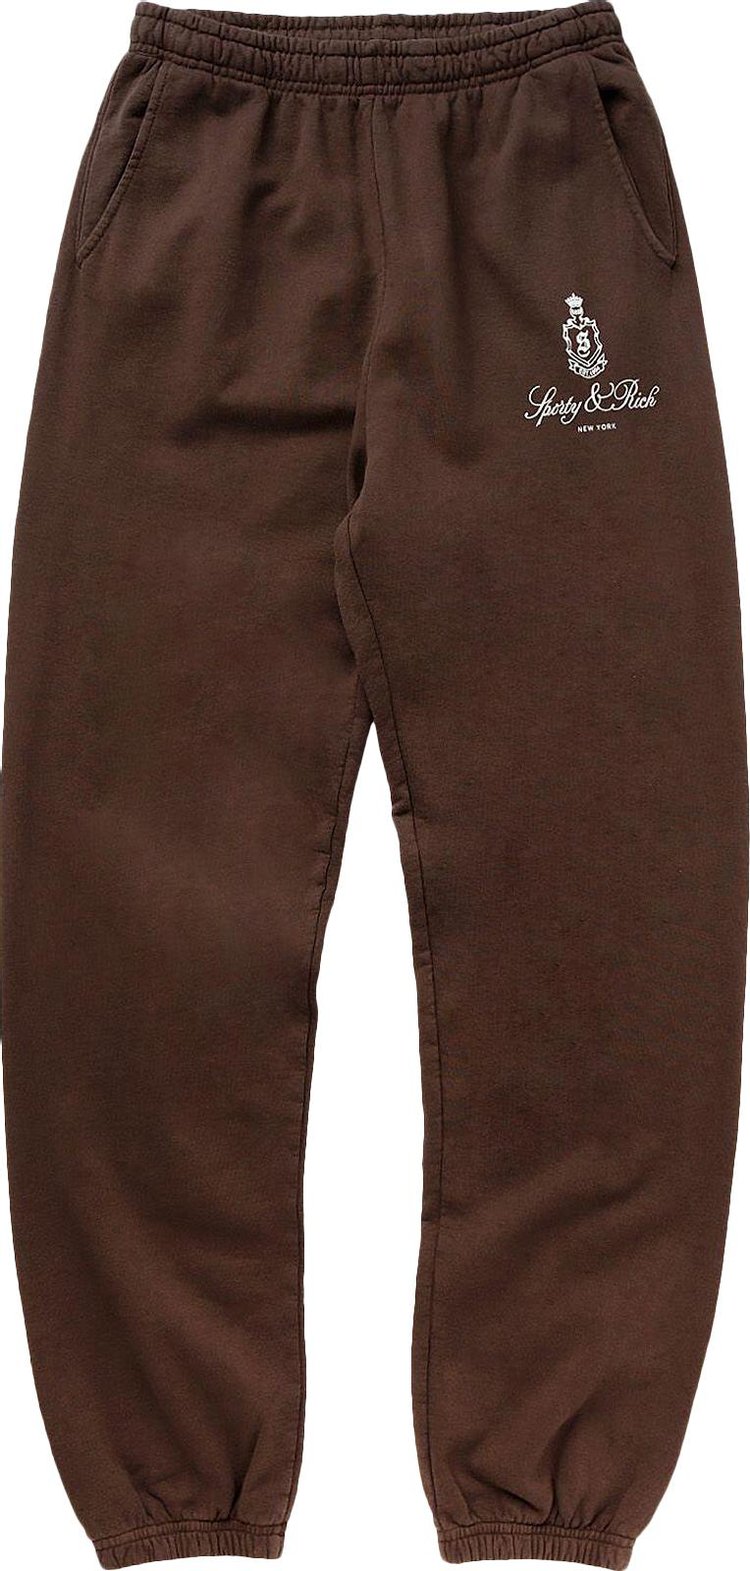 Спортивные брюки Sporty & Rich Vendome 'Chocolate', коричневый